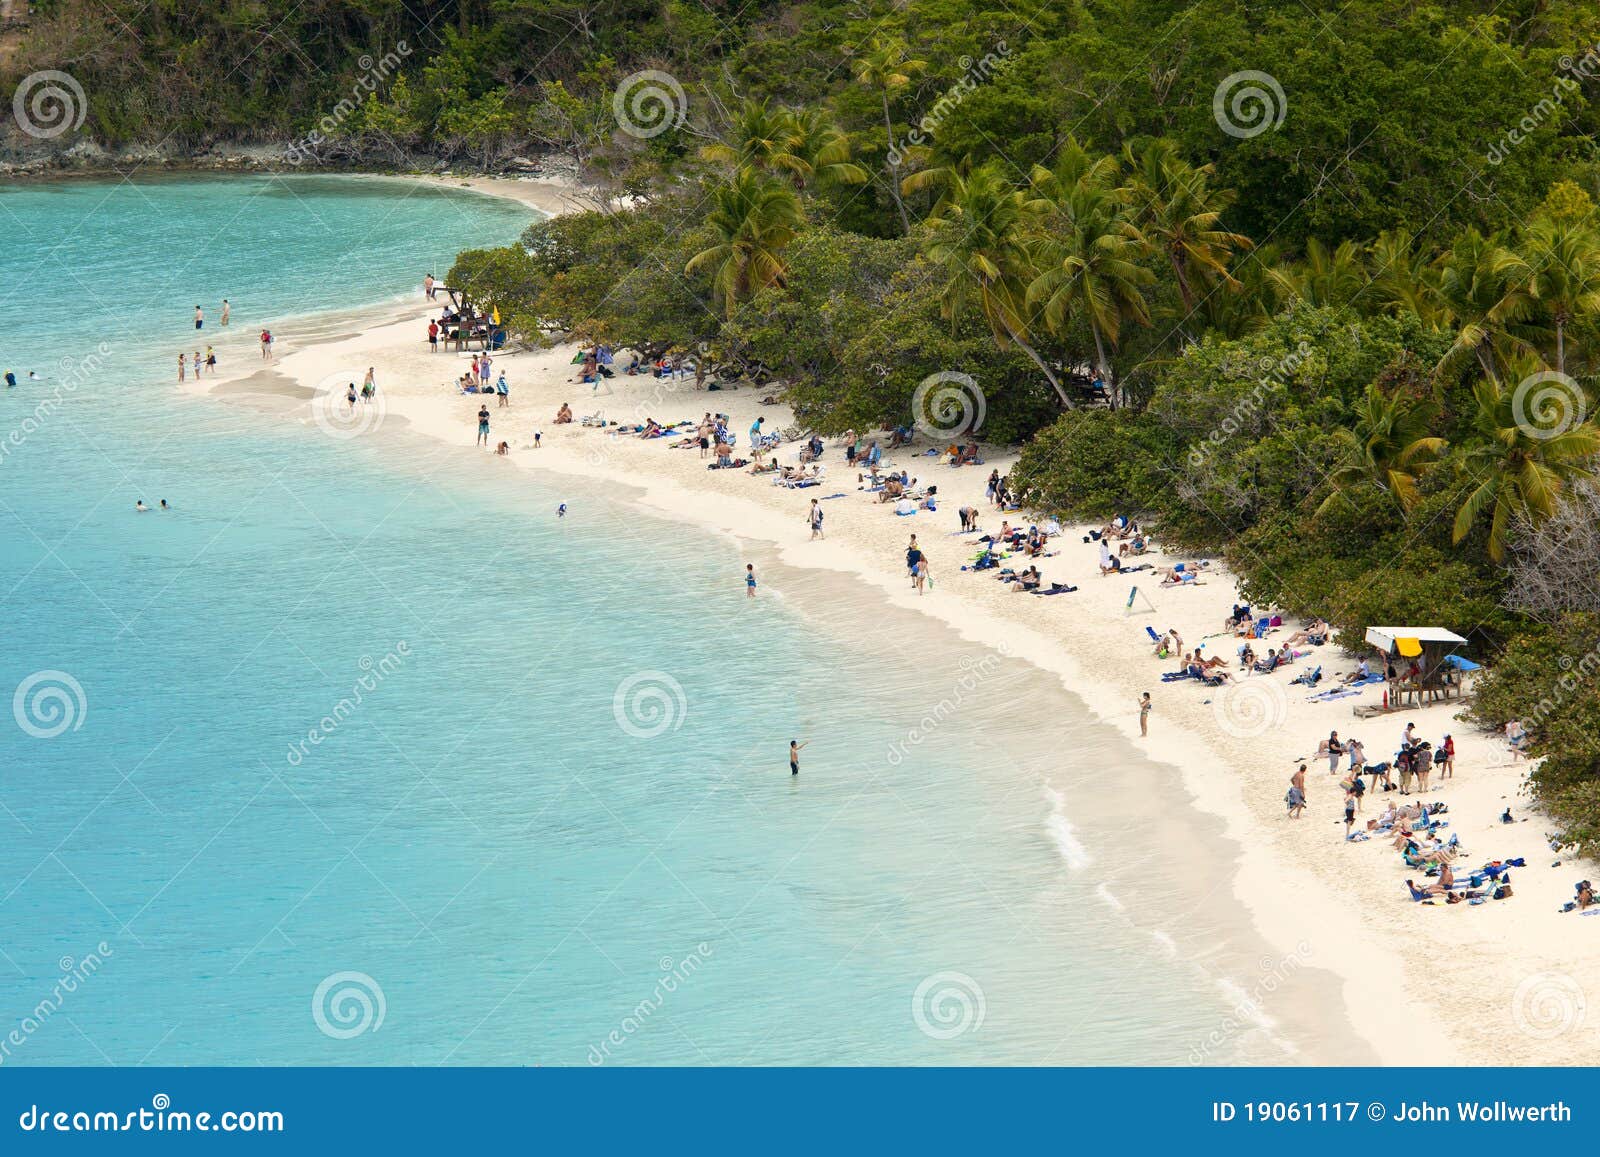 populated beach, us virgin islands